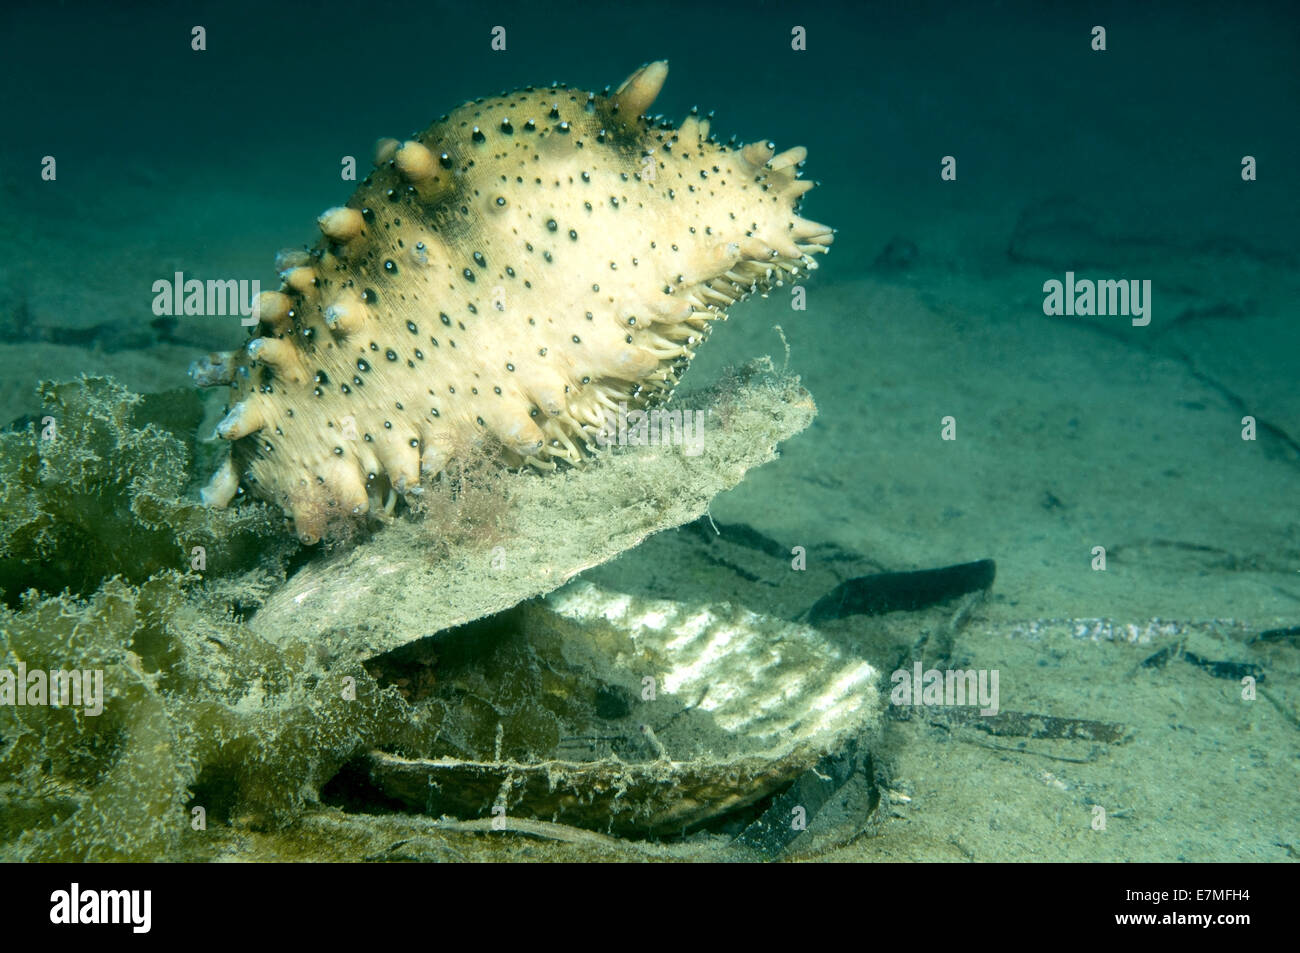 Japanese spiky sea cucumber or Japanese sea cucumber (Apostichopus japonicus) Sea of Japan (East sea) Stock Photo